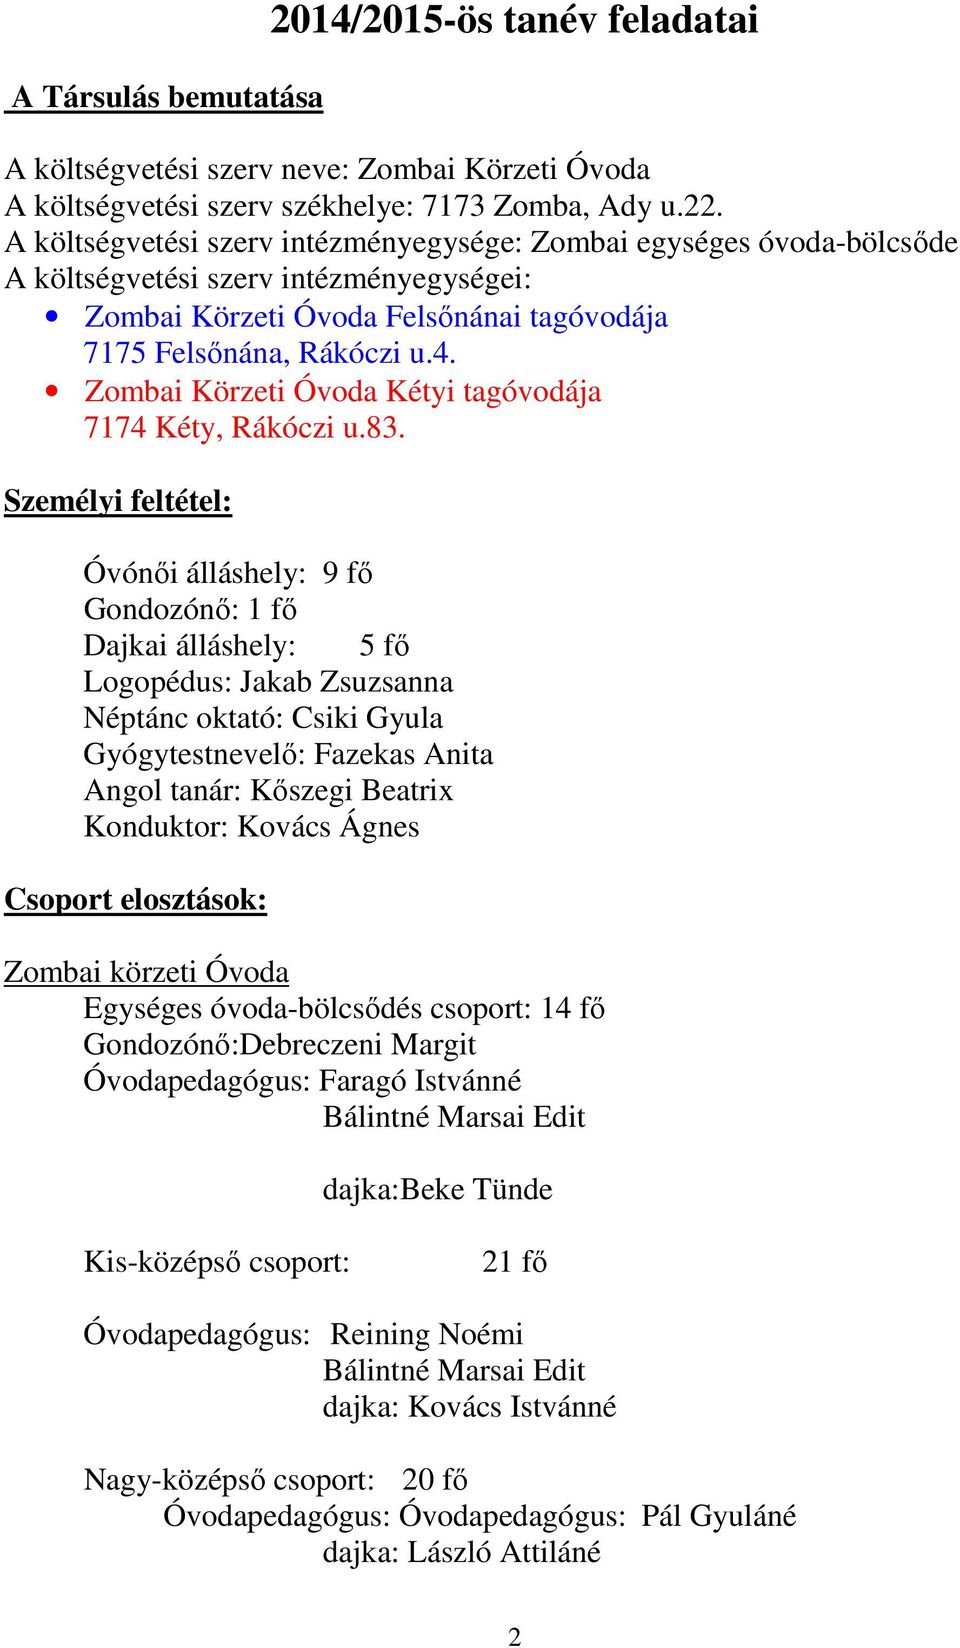 Zombai Körzeti Óvoda Kétyi tagóvodája 7174 Kéty, Rákóczi u.83.